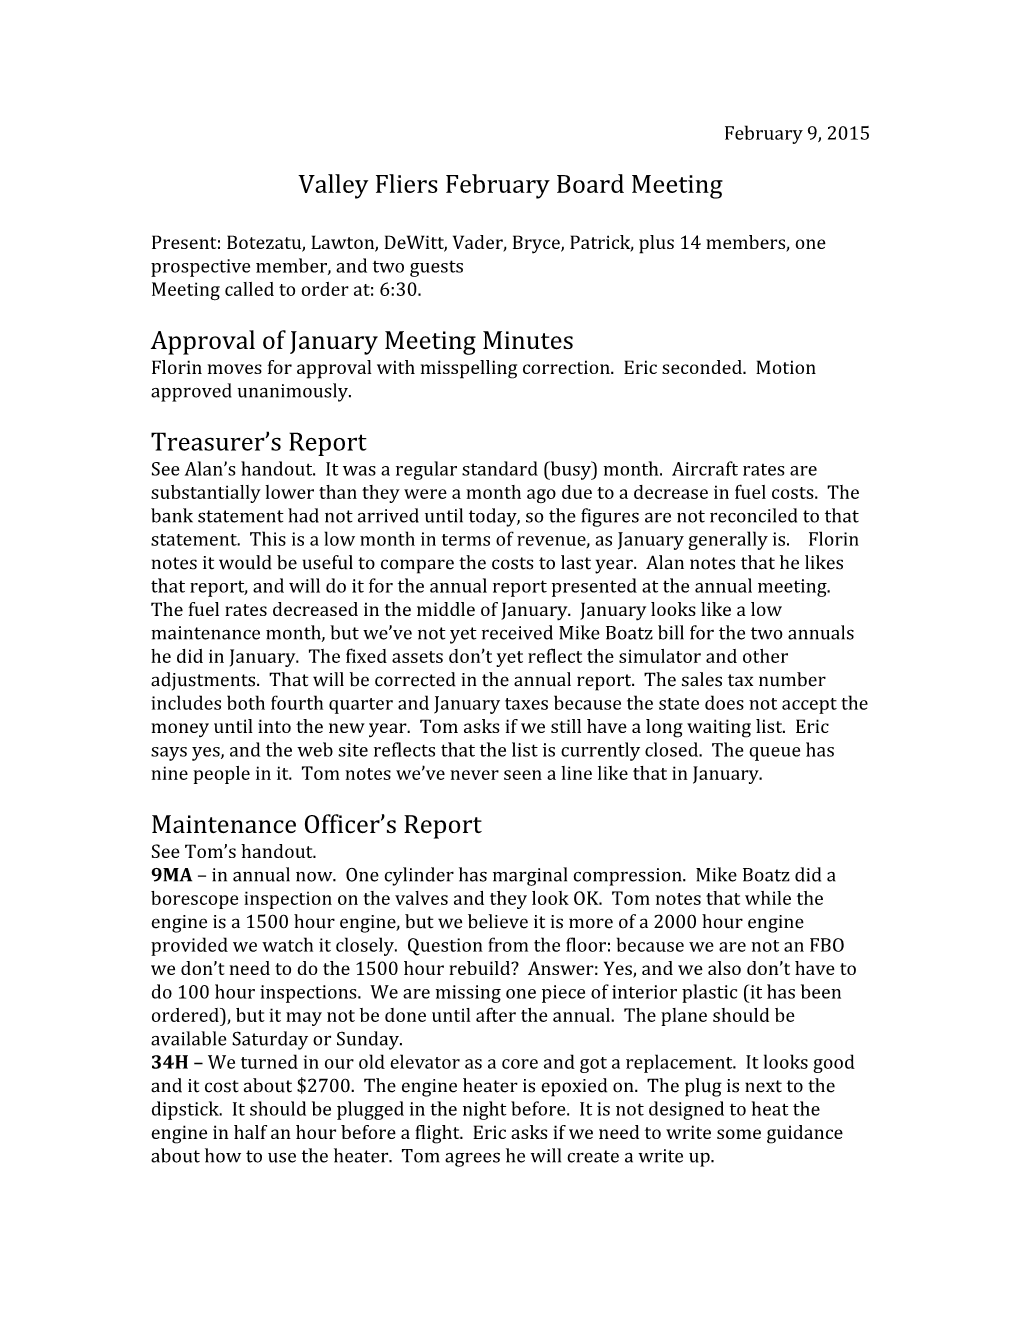 Valley Fliers February Board Meeting